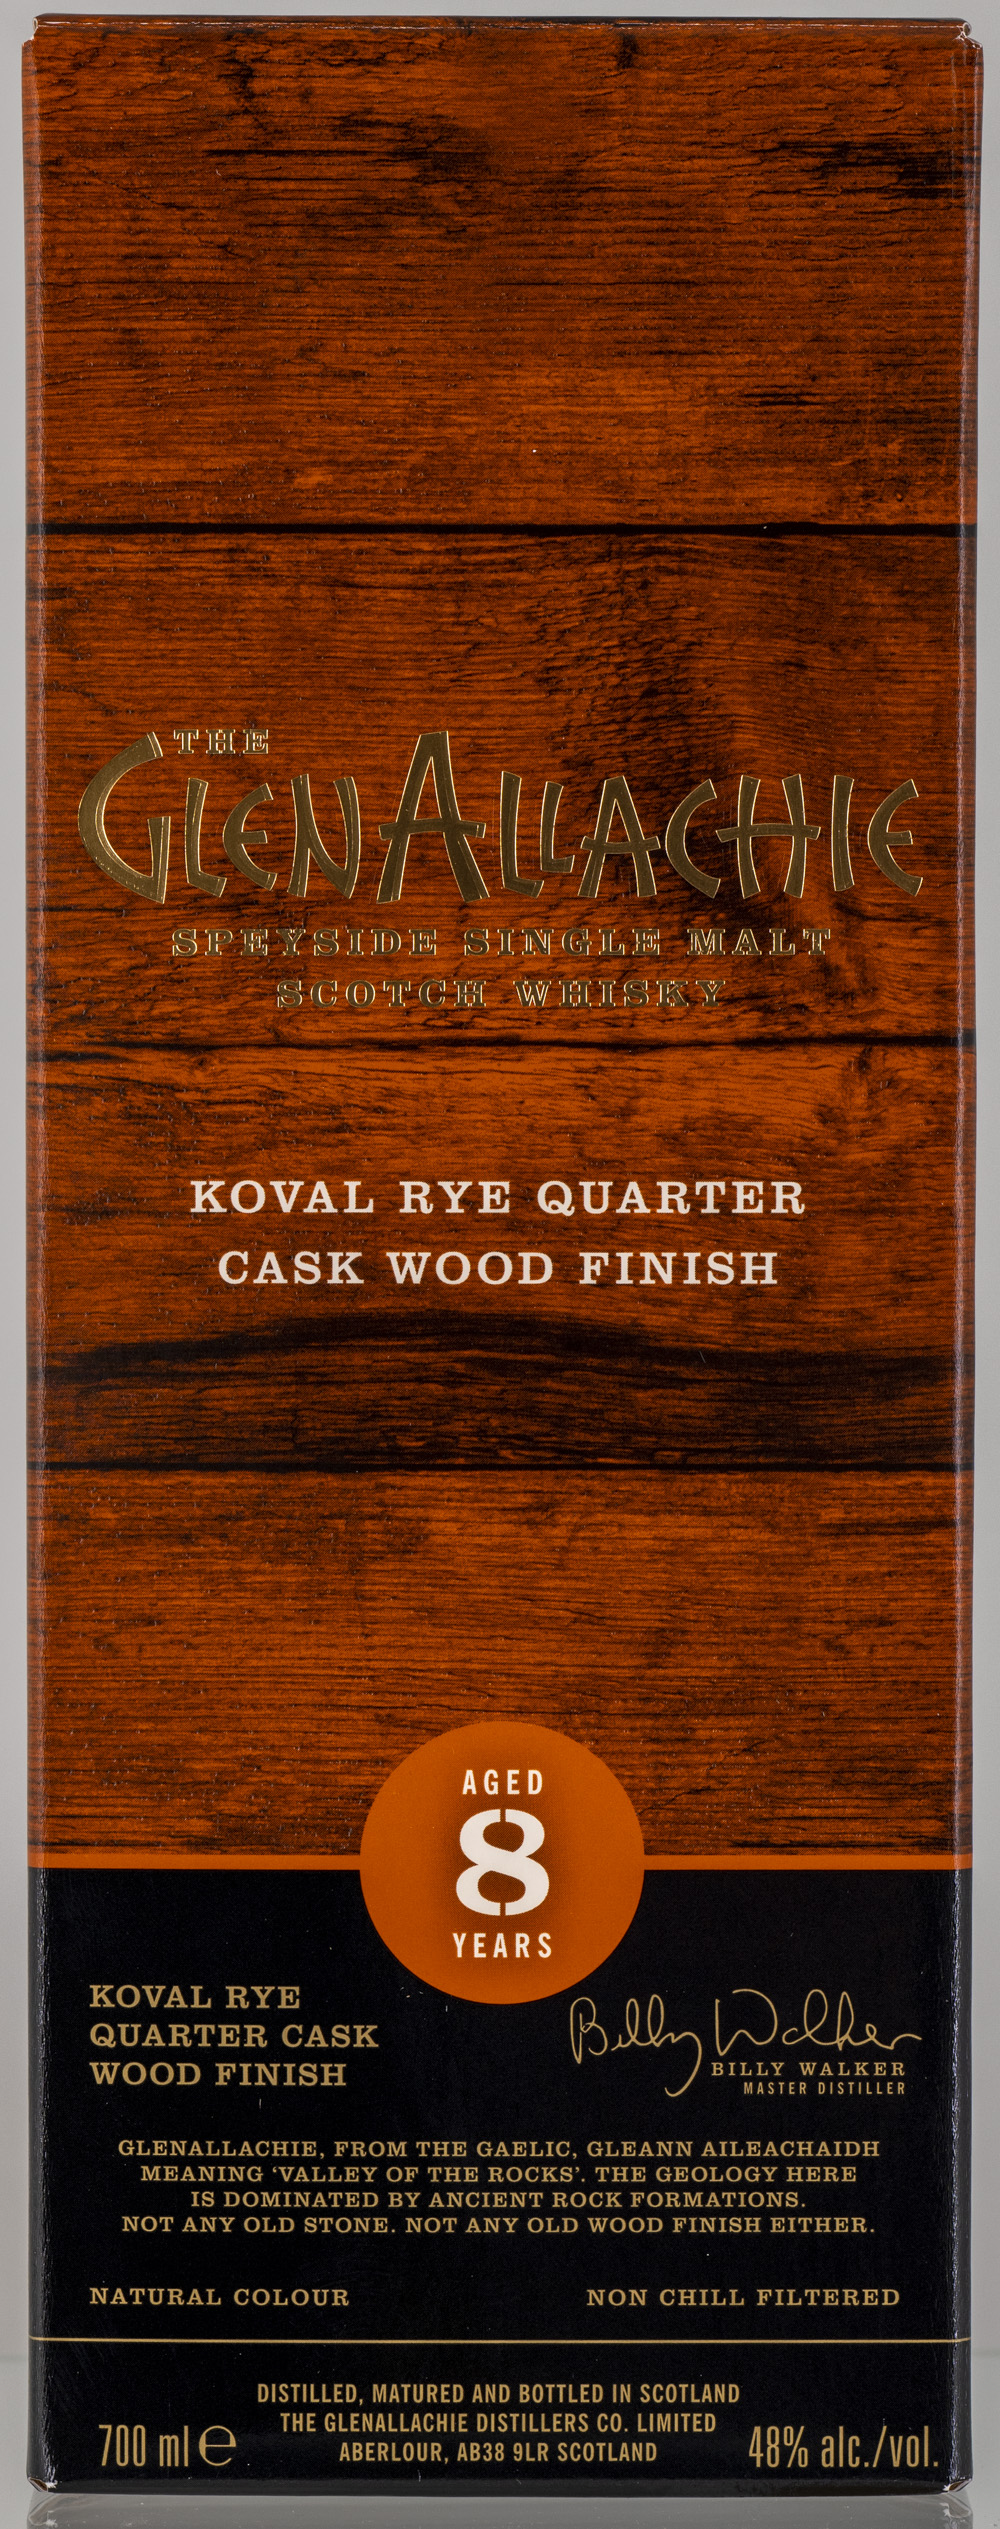 Billede: PHC_2274 - GelAllachie 8 Koval Rye Quarter Cask Wood Finish - box front.jpg